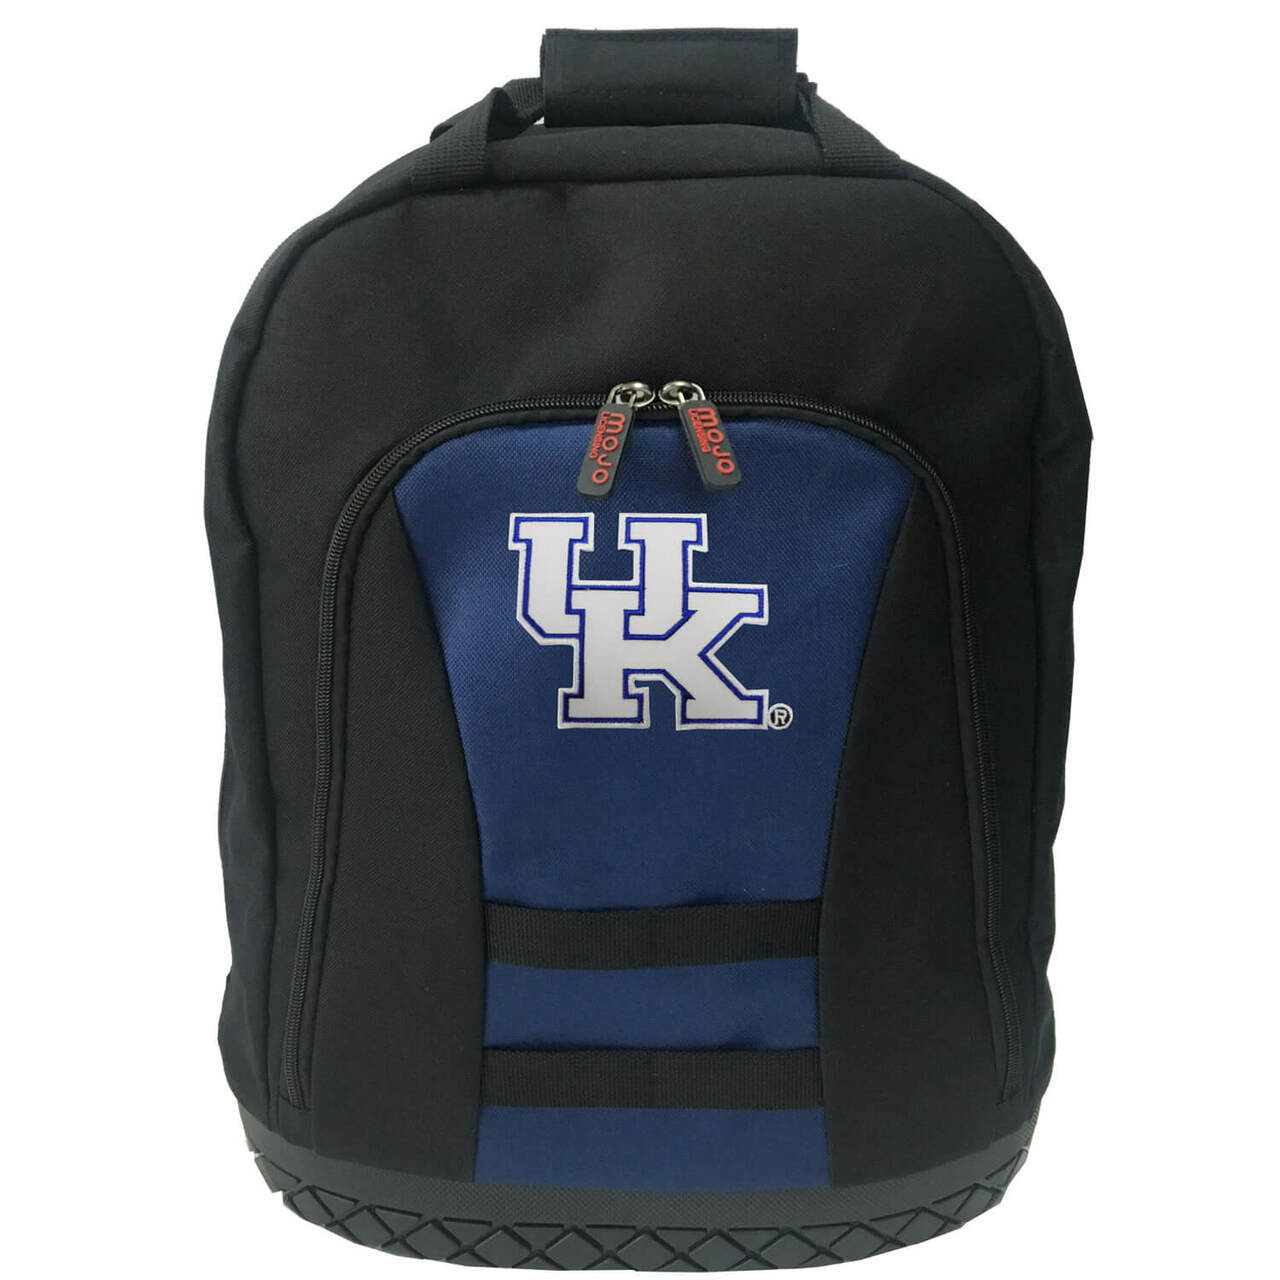 Kentucky Wildcats Tool Bag Backpack